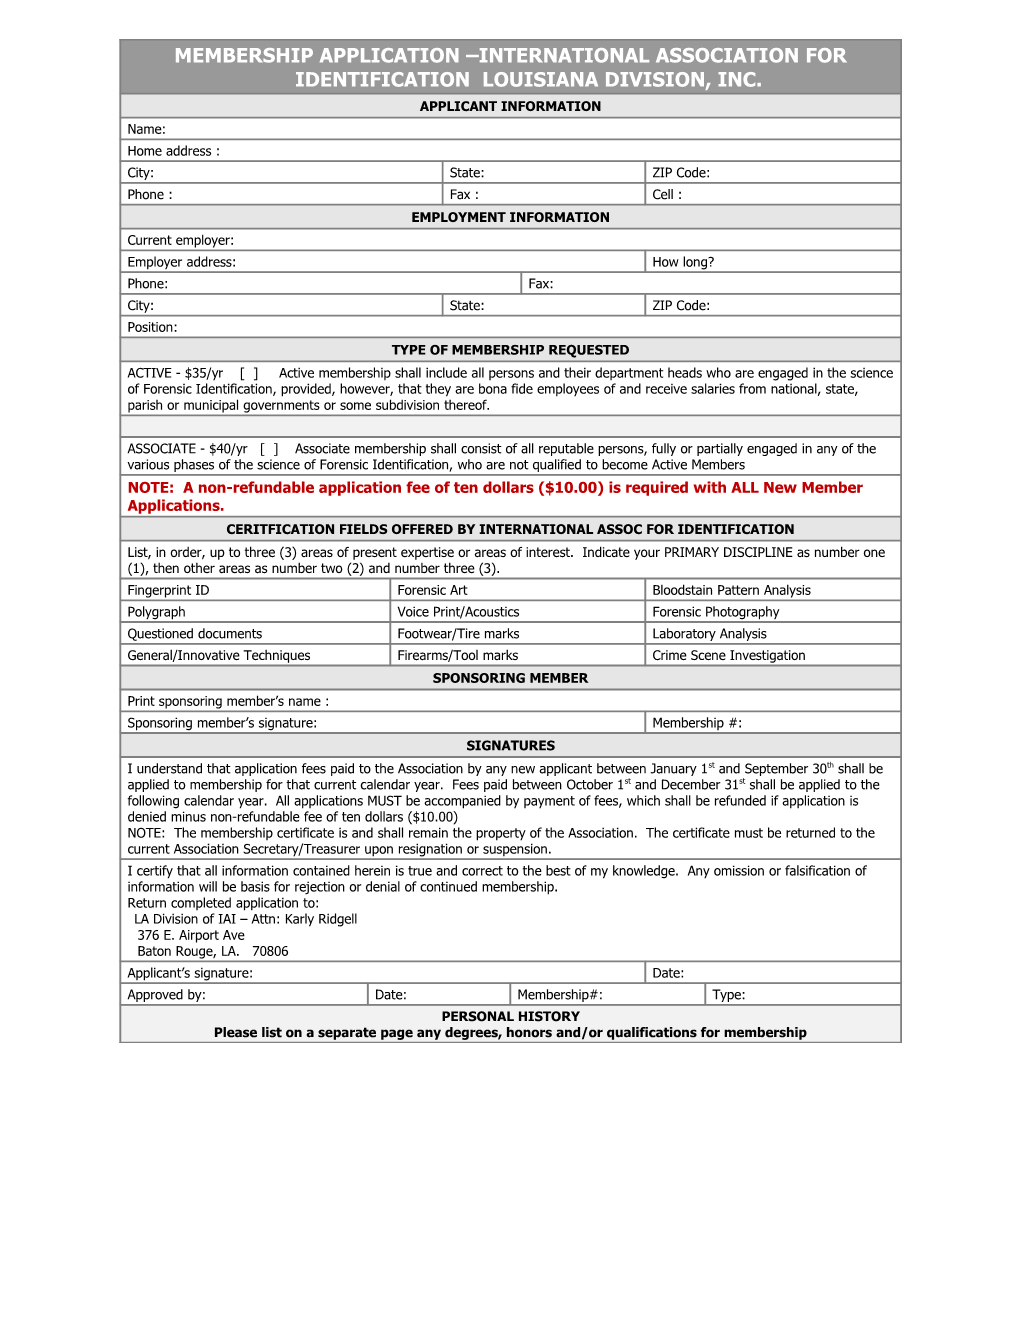 Membership Application International Association for Identification Louisiana Division, Inc